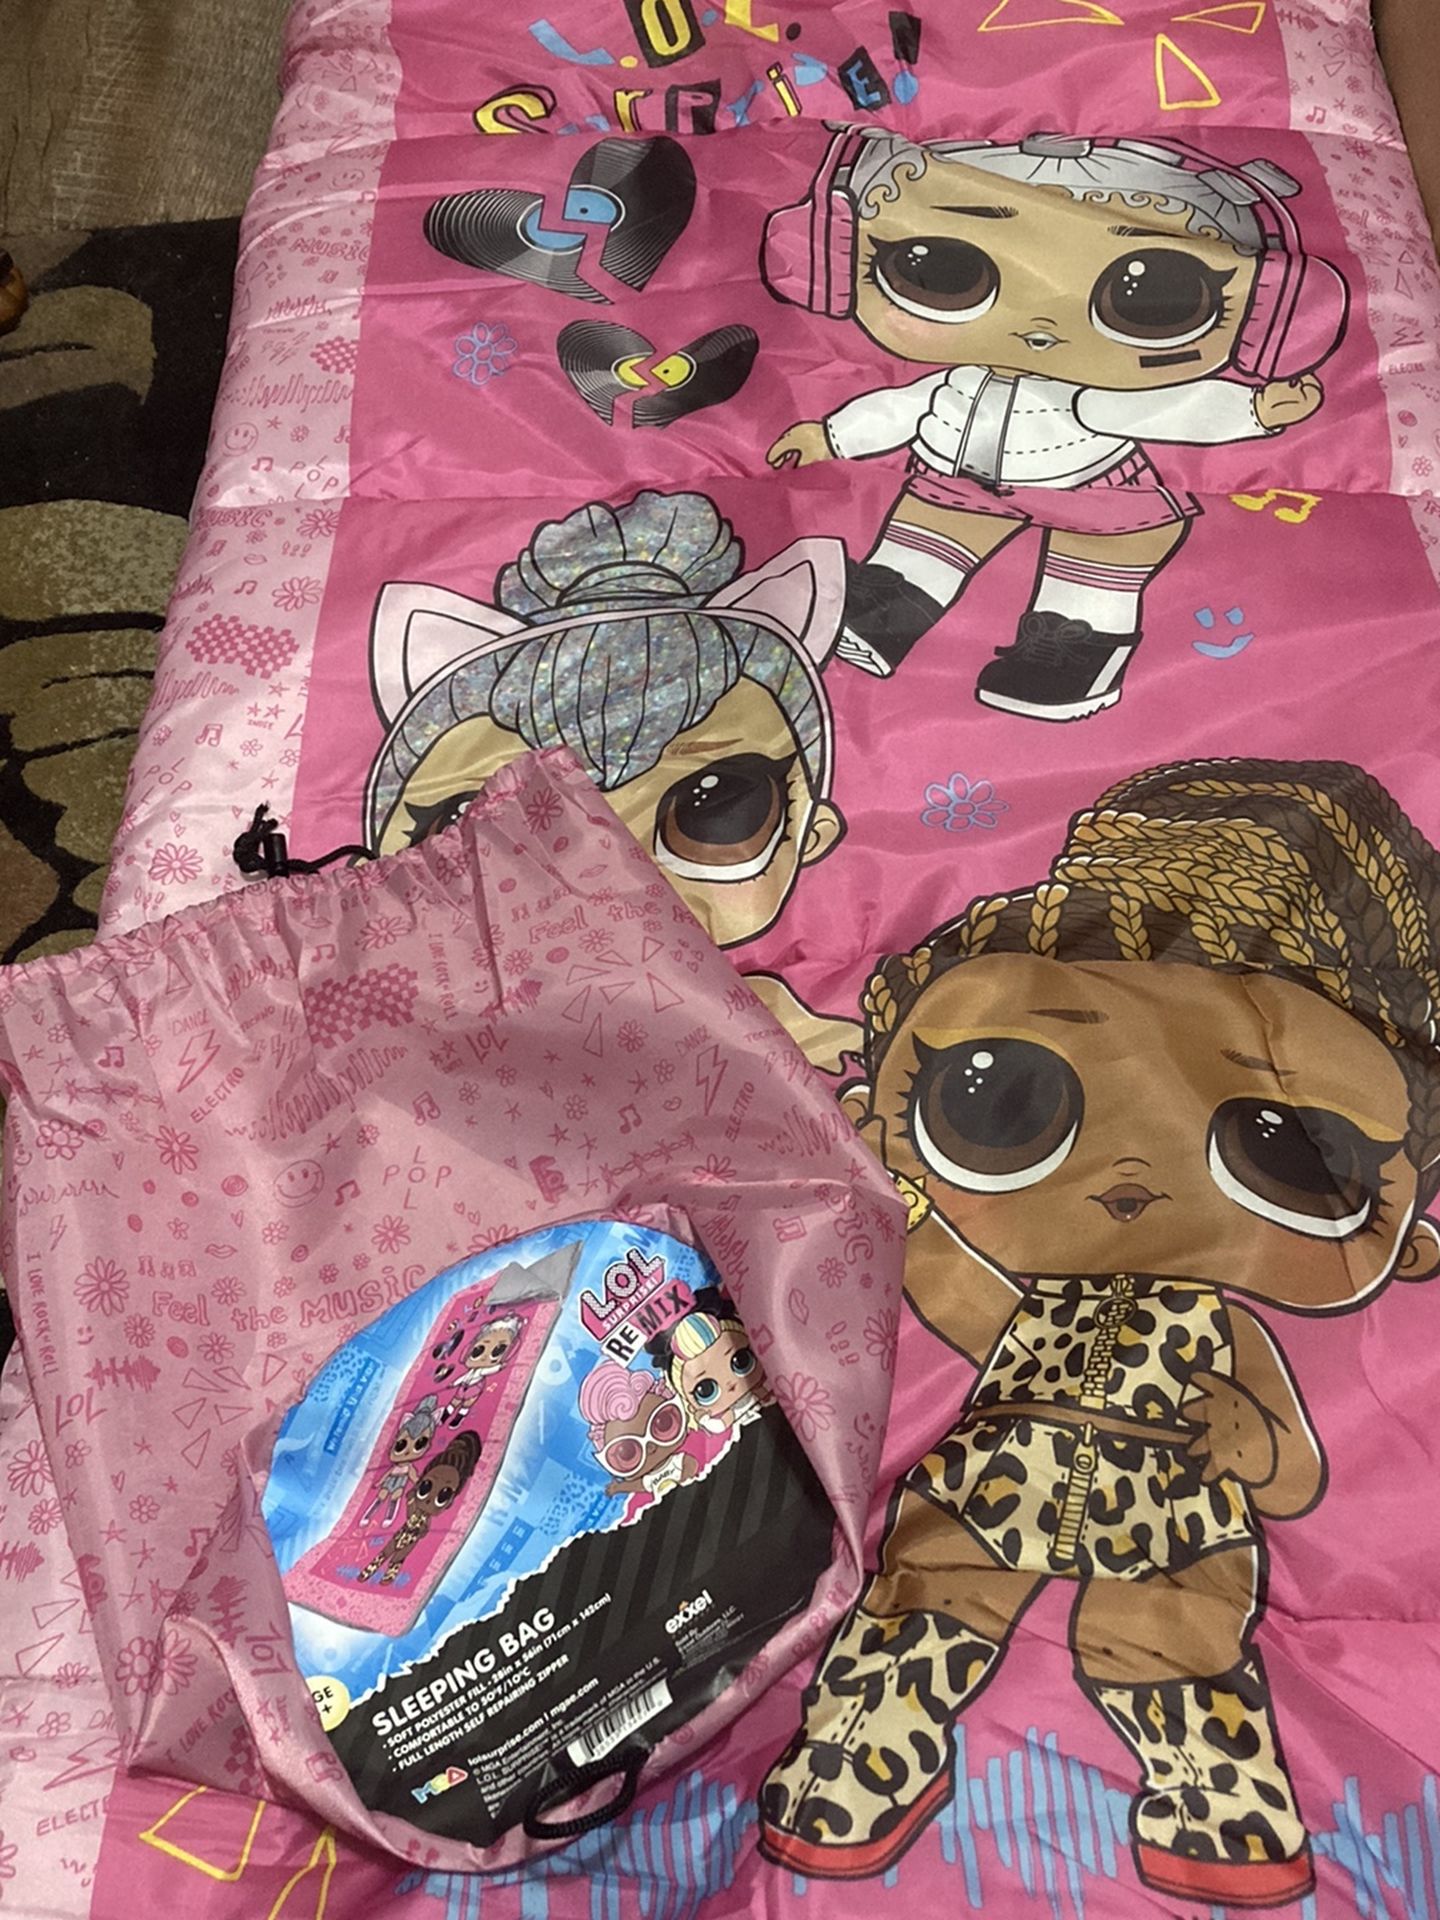 Brand New LOL! Girls Sleeping Bag! $20 OBO! I Have 2!